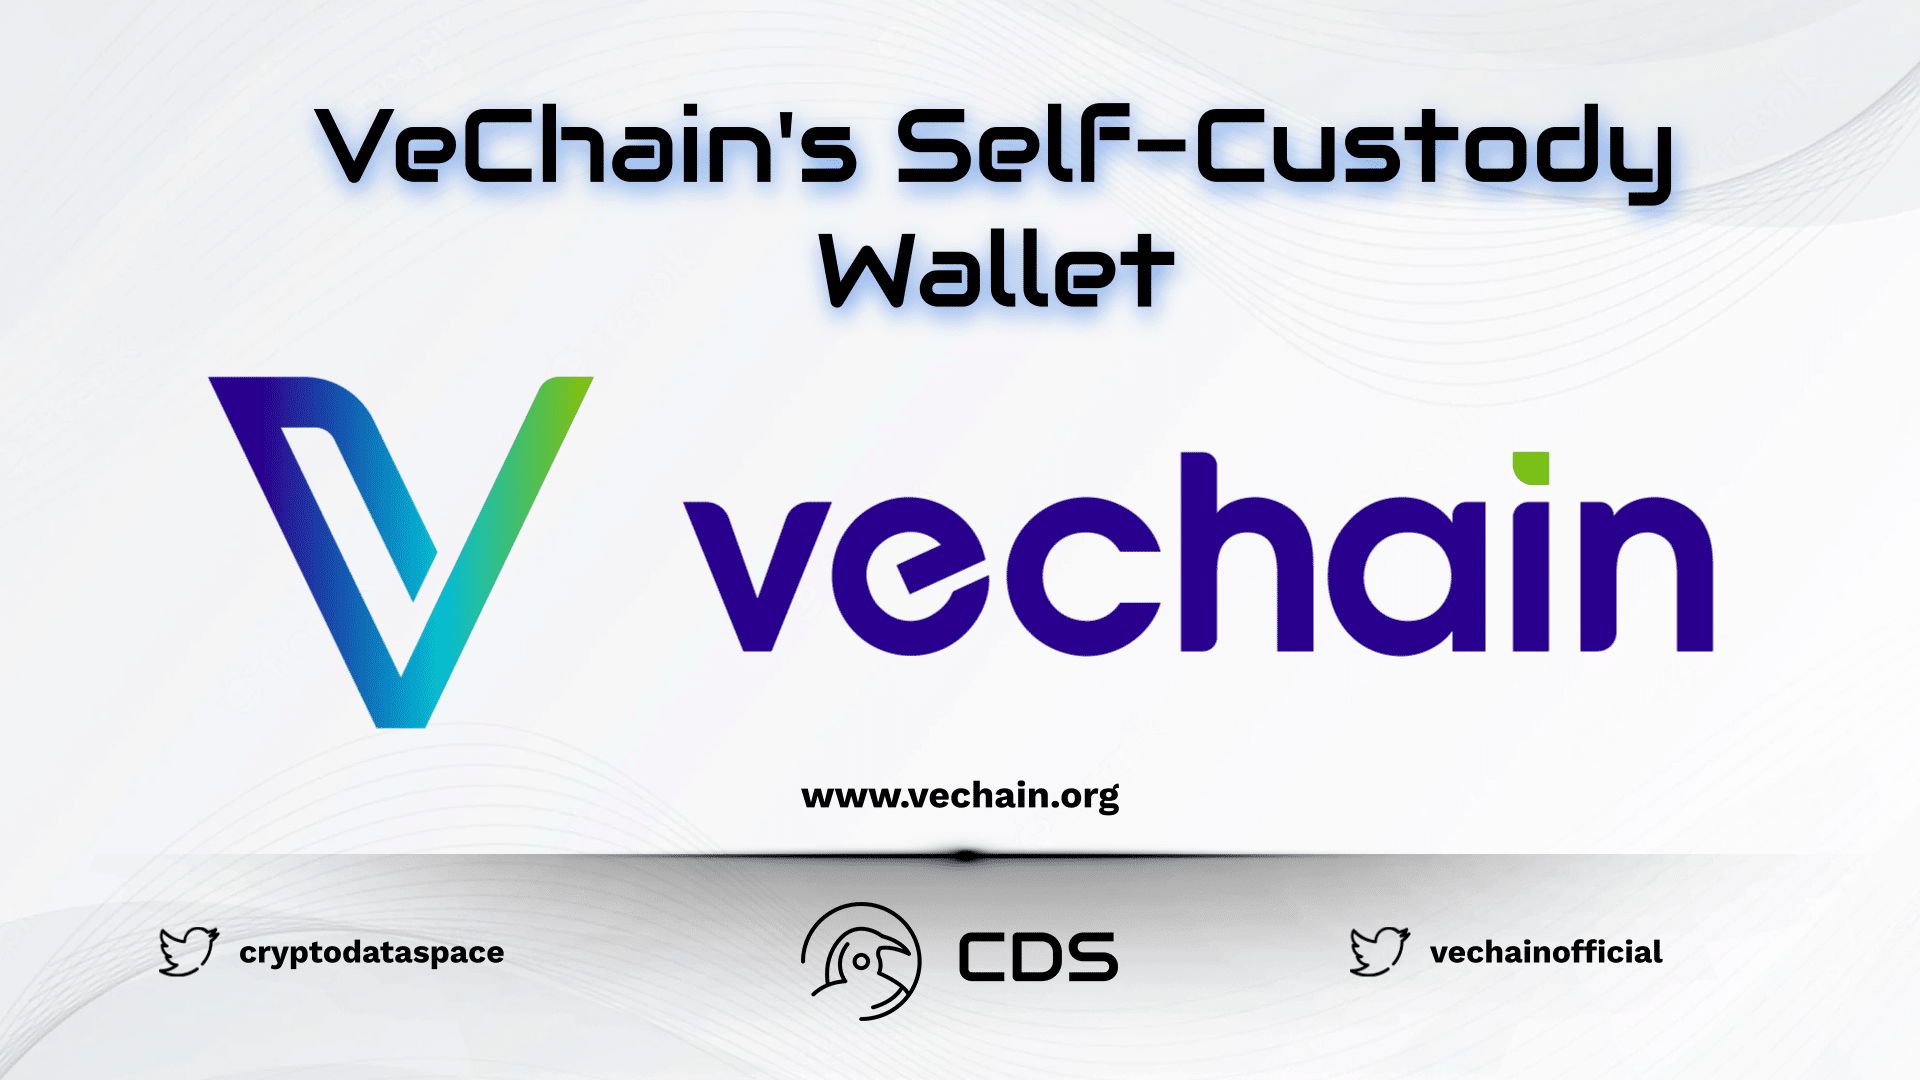 VeChain's Self-Custody Wallet